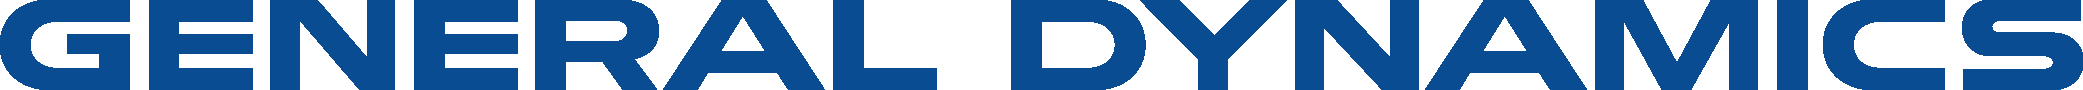 General Dynamics Logo png